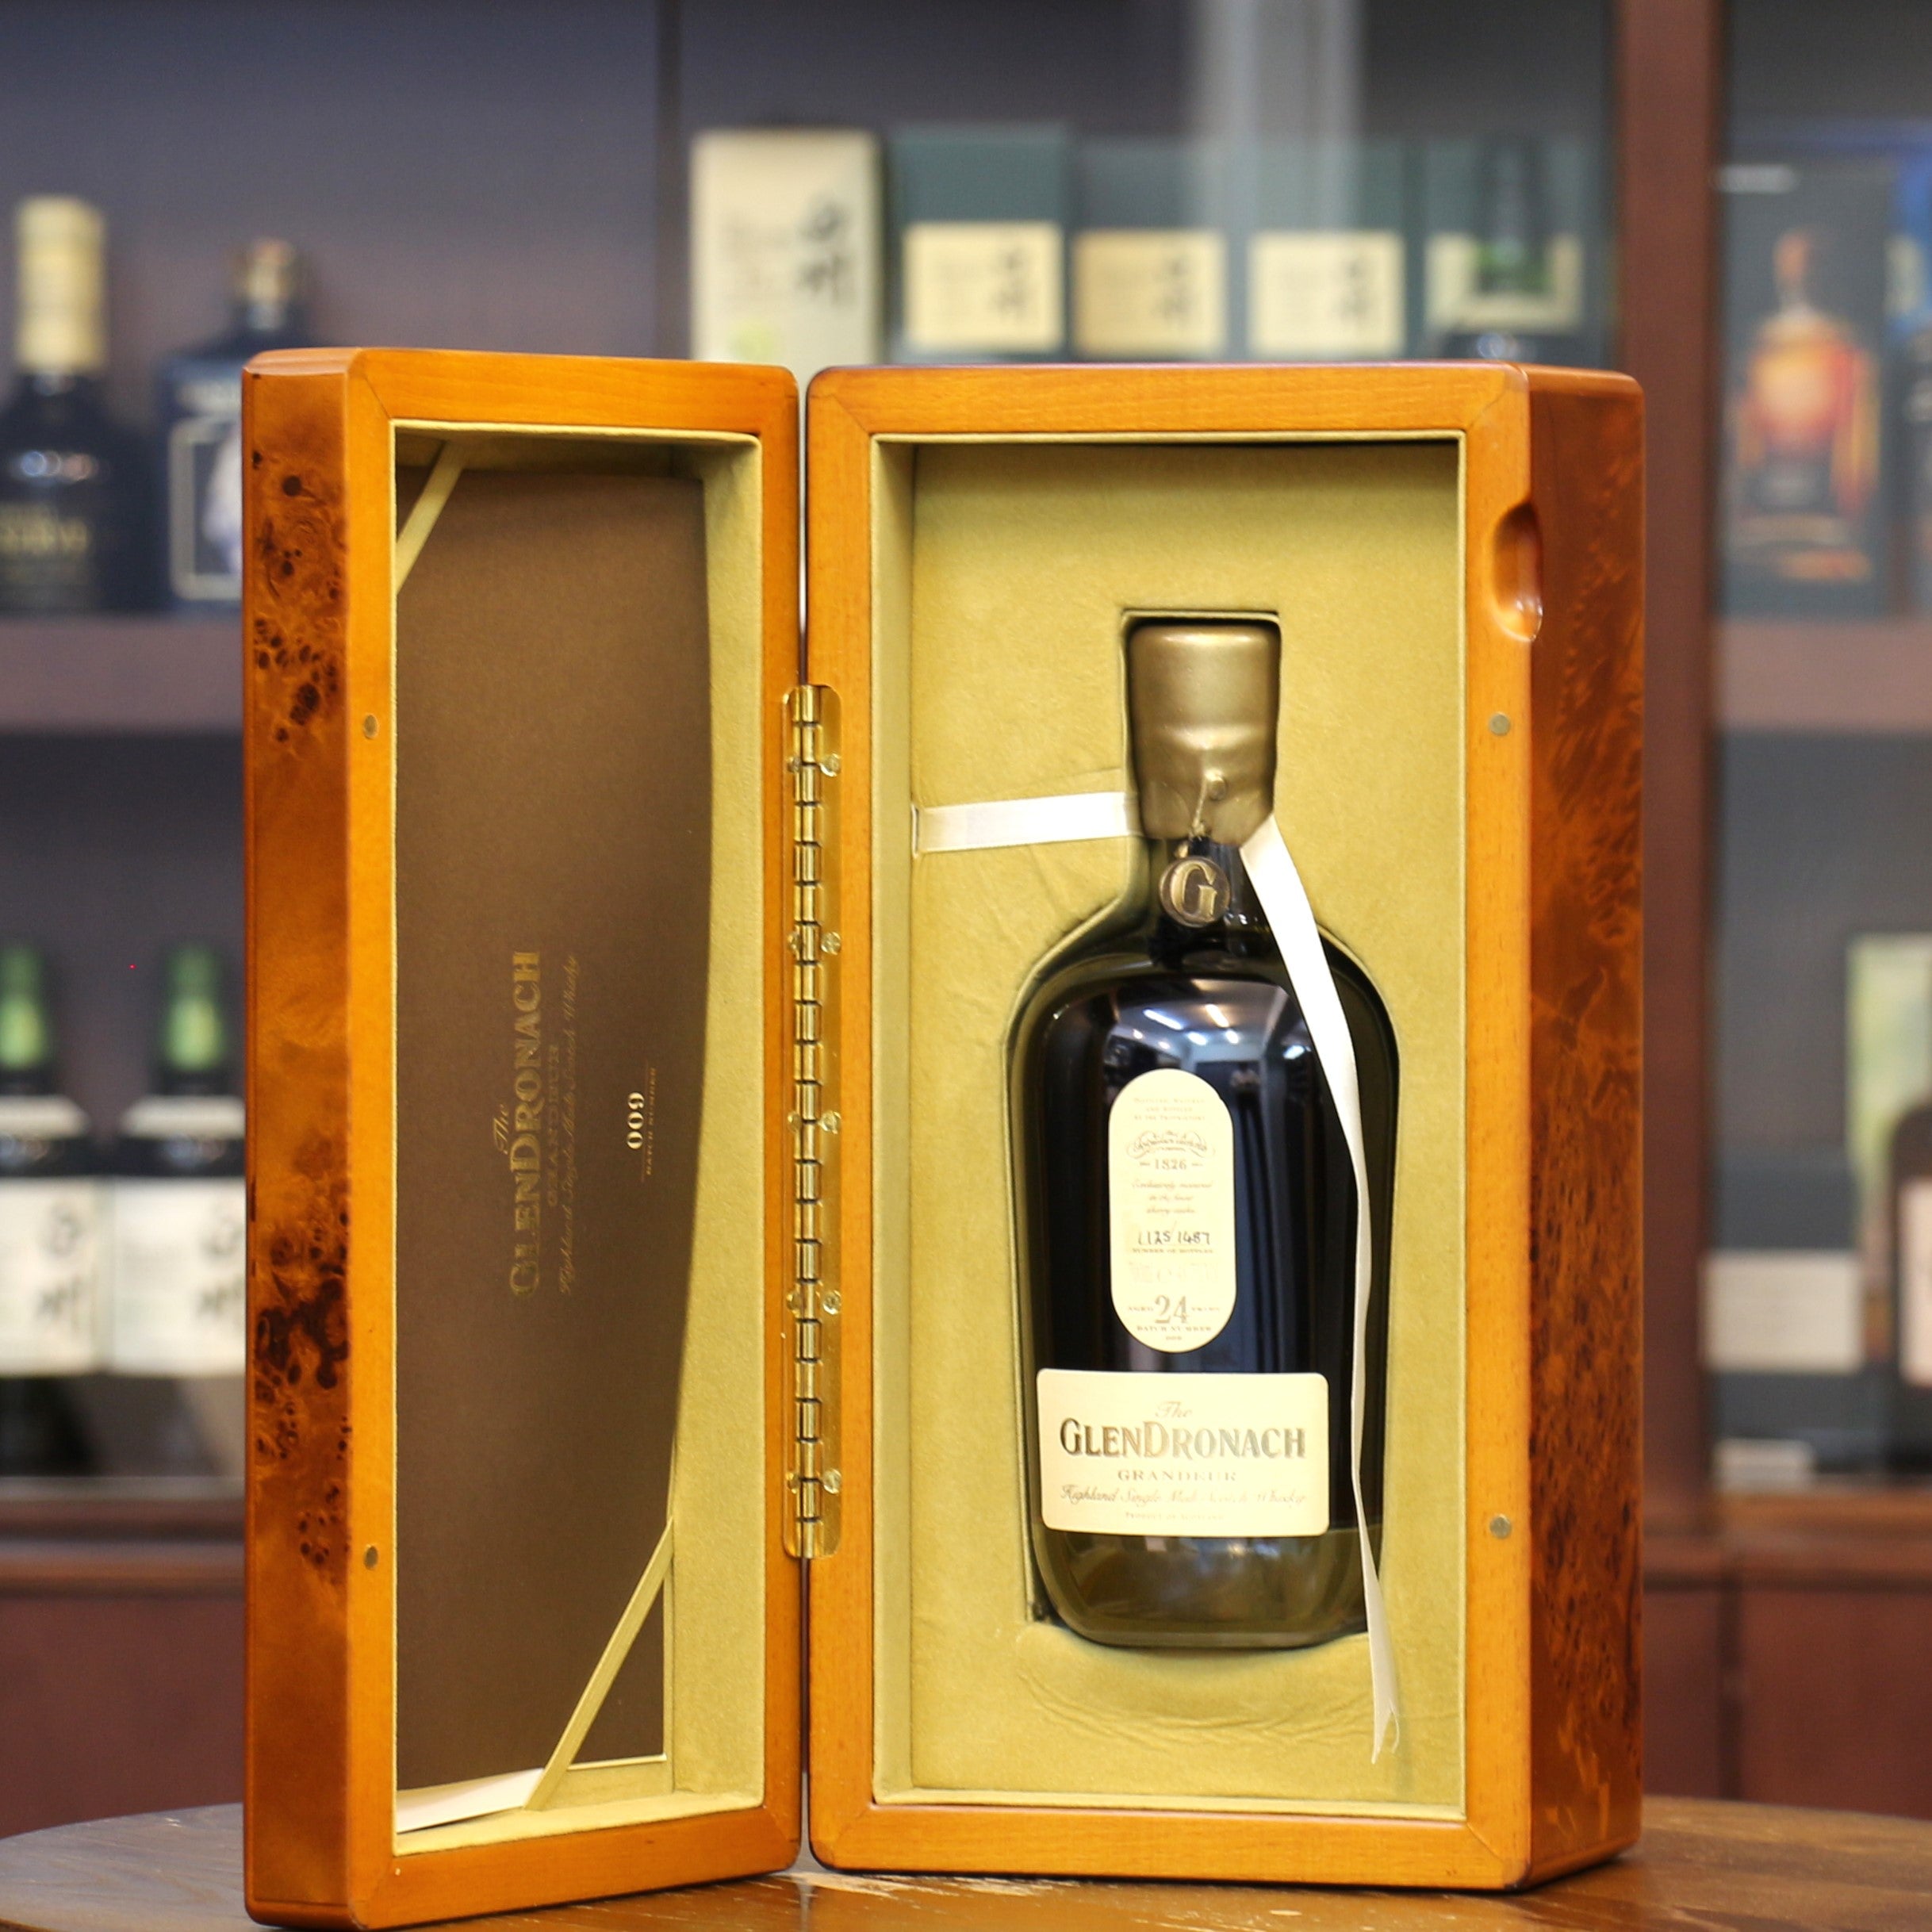 GlenDronach Grandeur 24 年批次 9 單一麥芽蘇格蘭威士忌